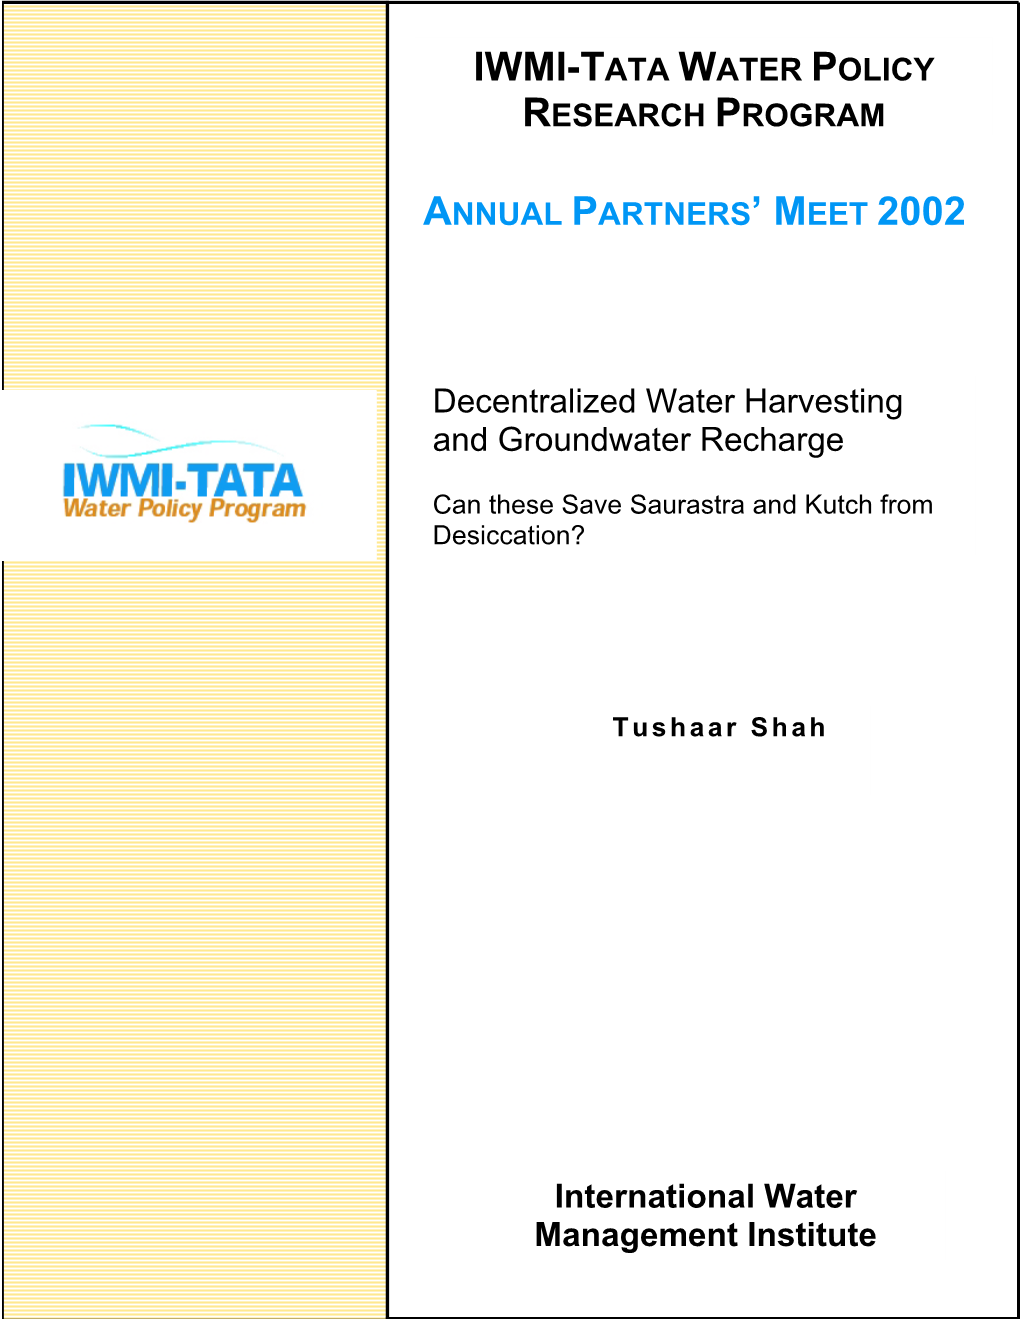 IWMI-Tata Partners' Meet Papers